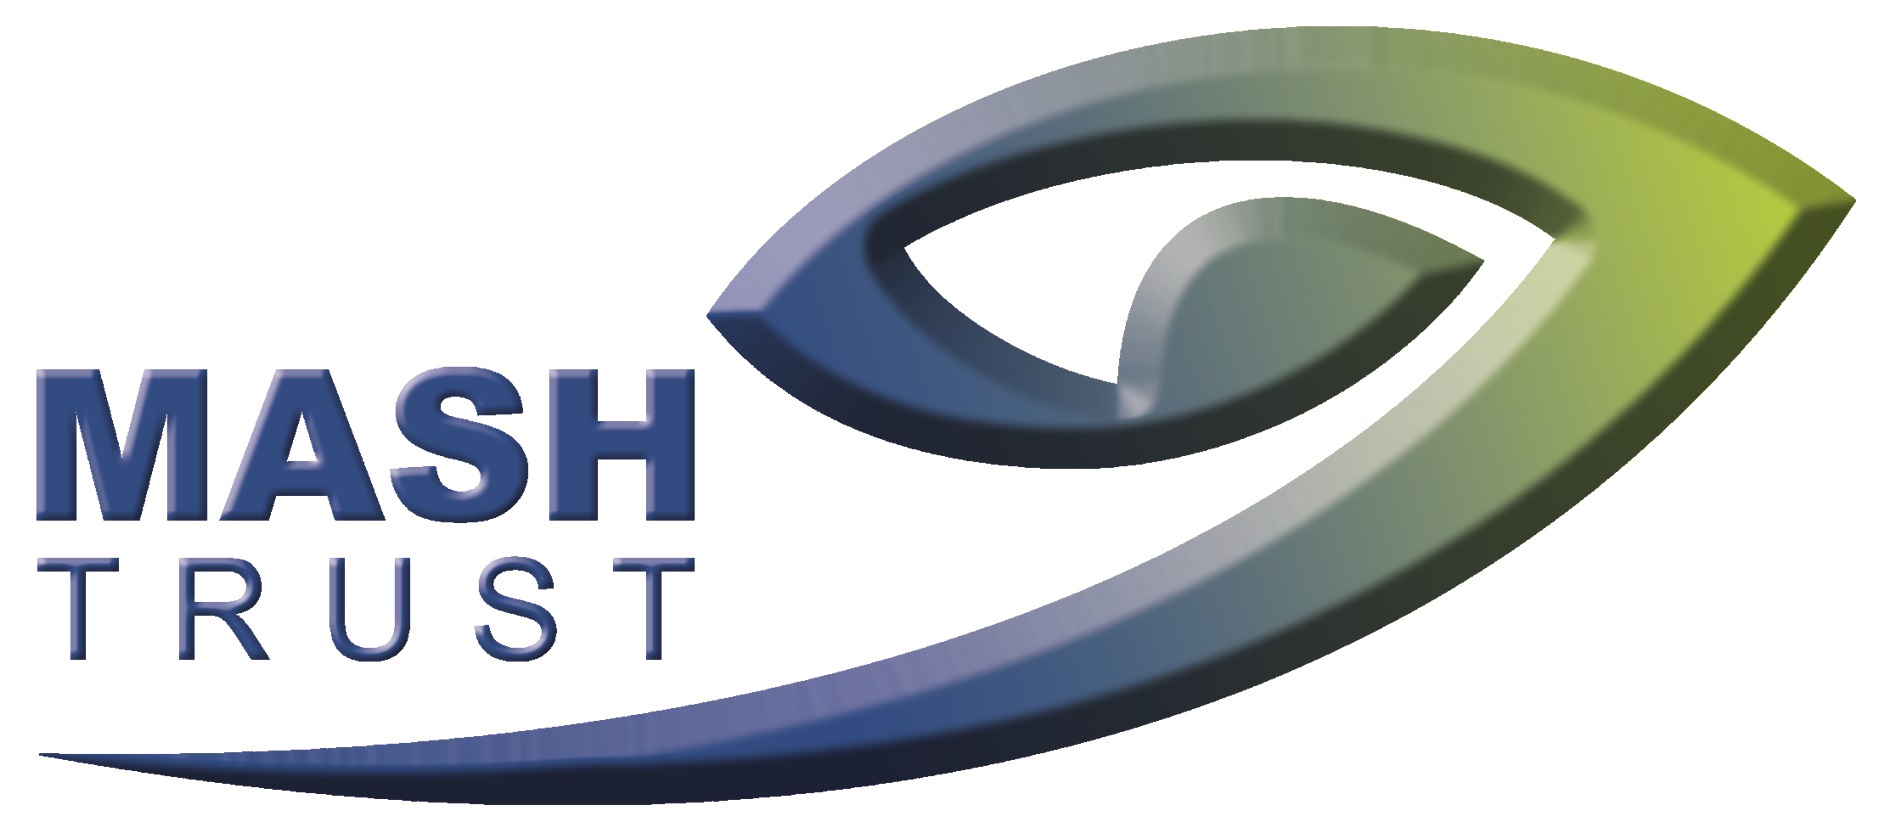 Mash trust logo